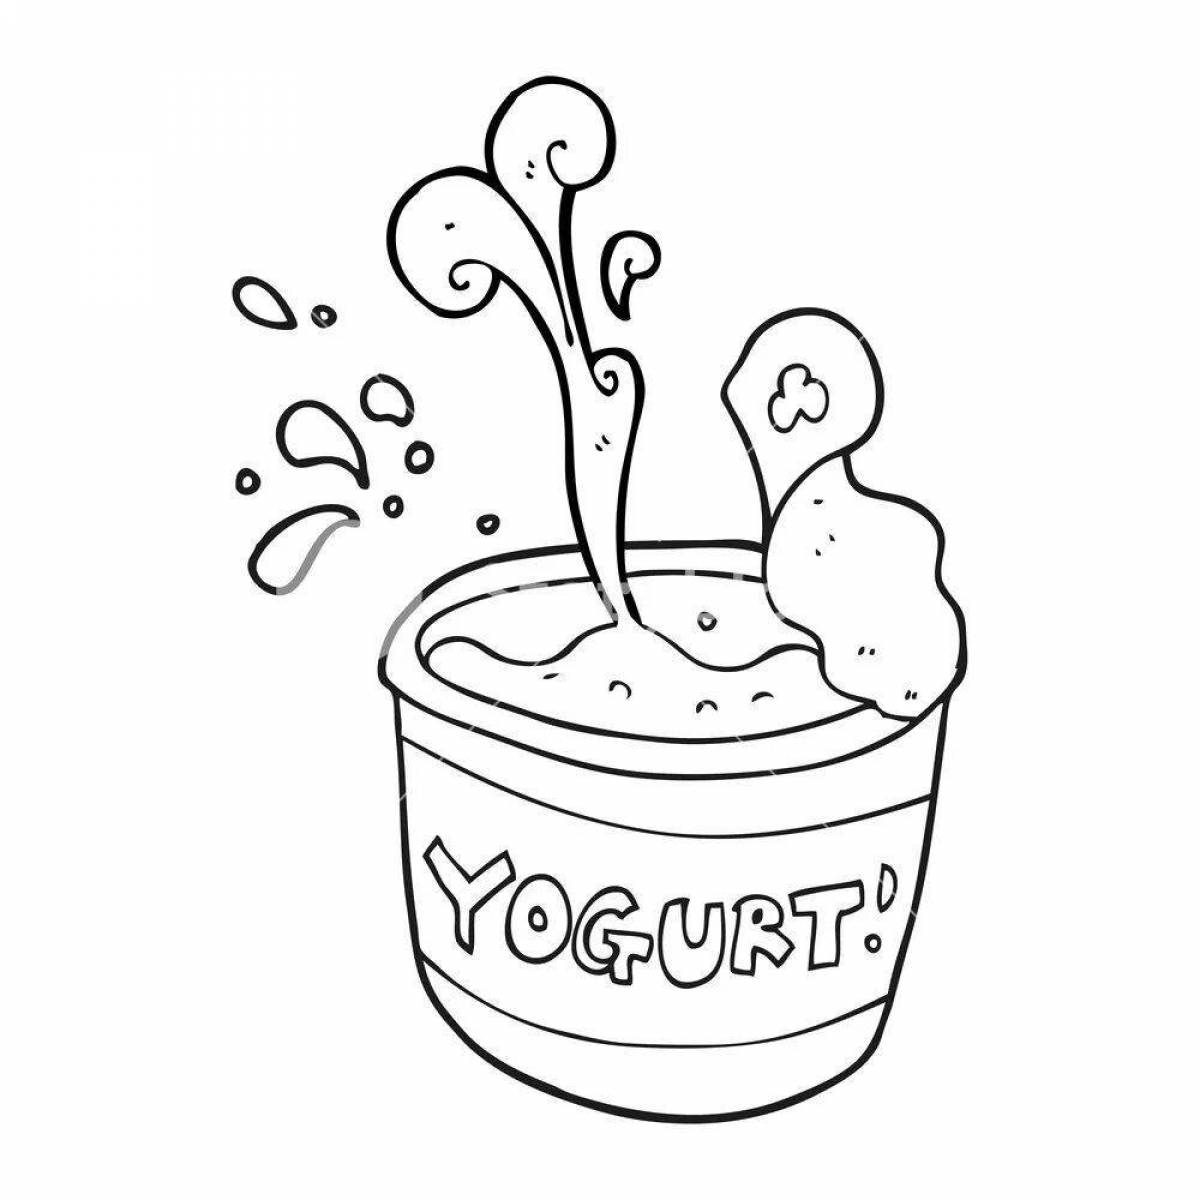 Adorable yogurt coloring book for kids